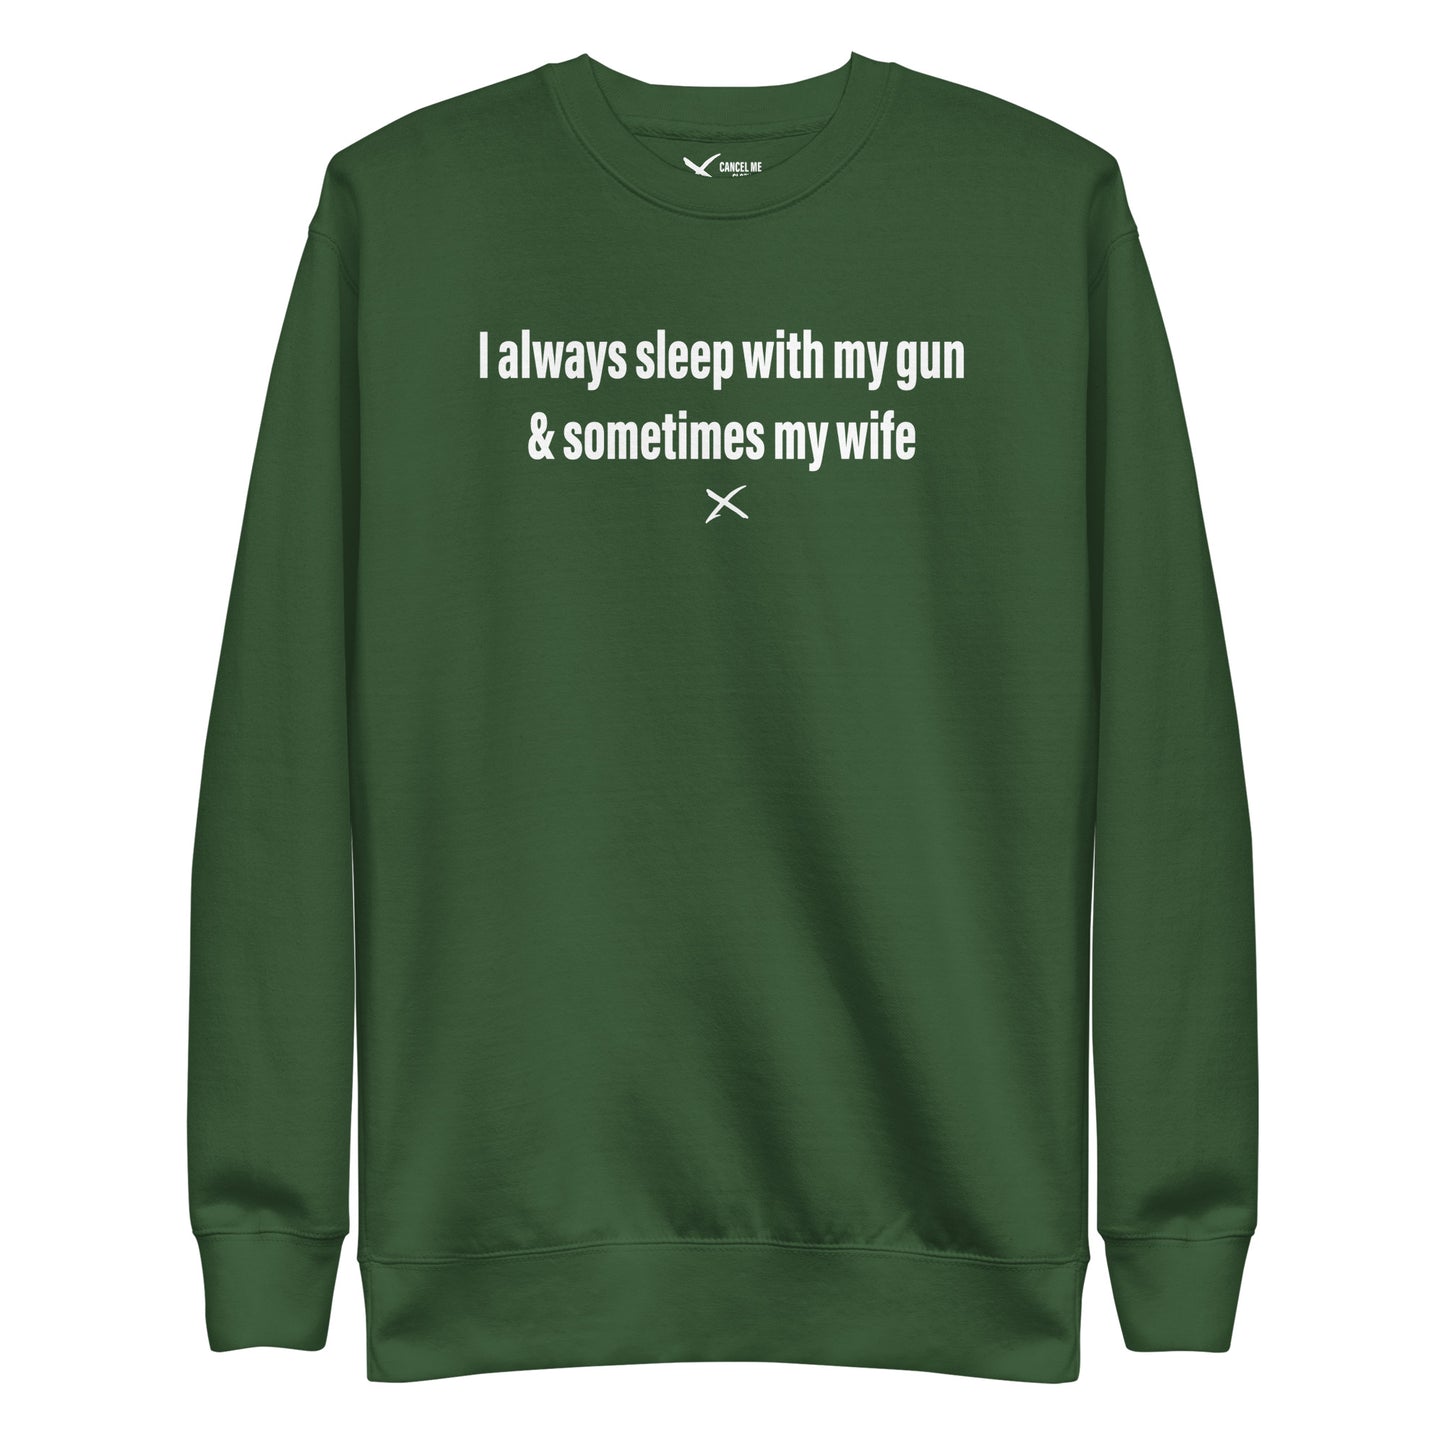 I always sleep with my gun & sometimes my wife - Sweatshirt